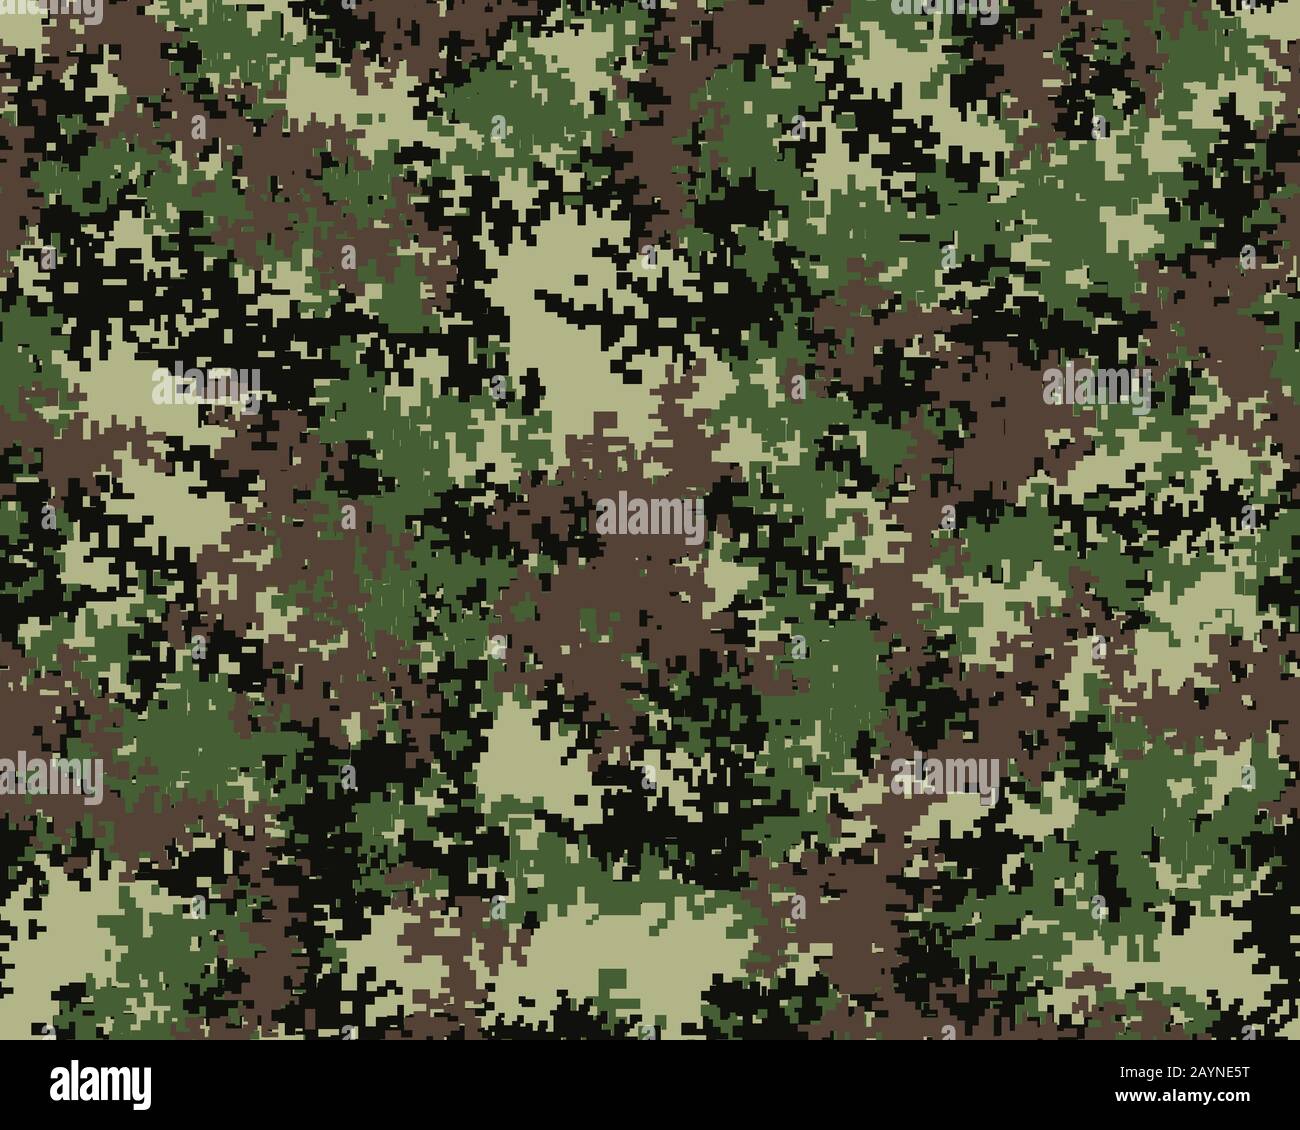 Digital fashionable camouflage pattern, military print .Seamless illustration, wallpaper Stock Photo